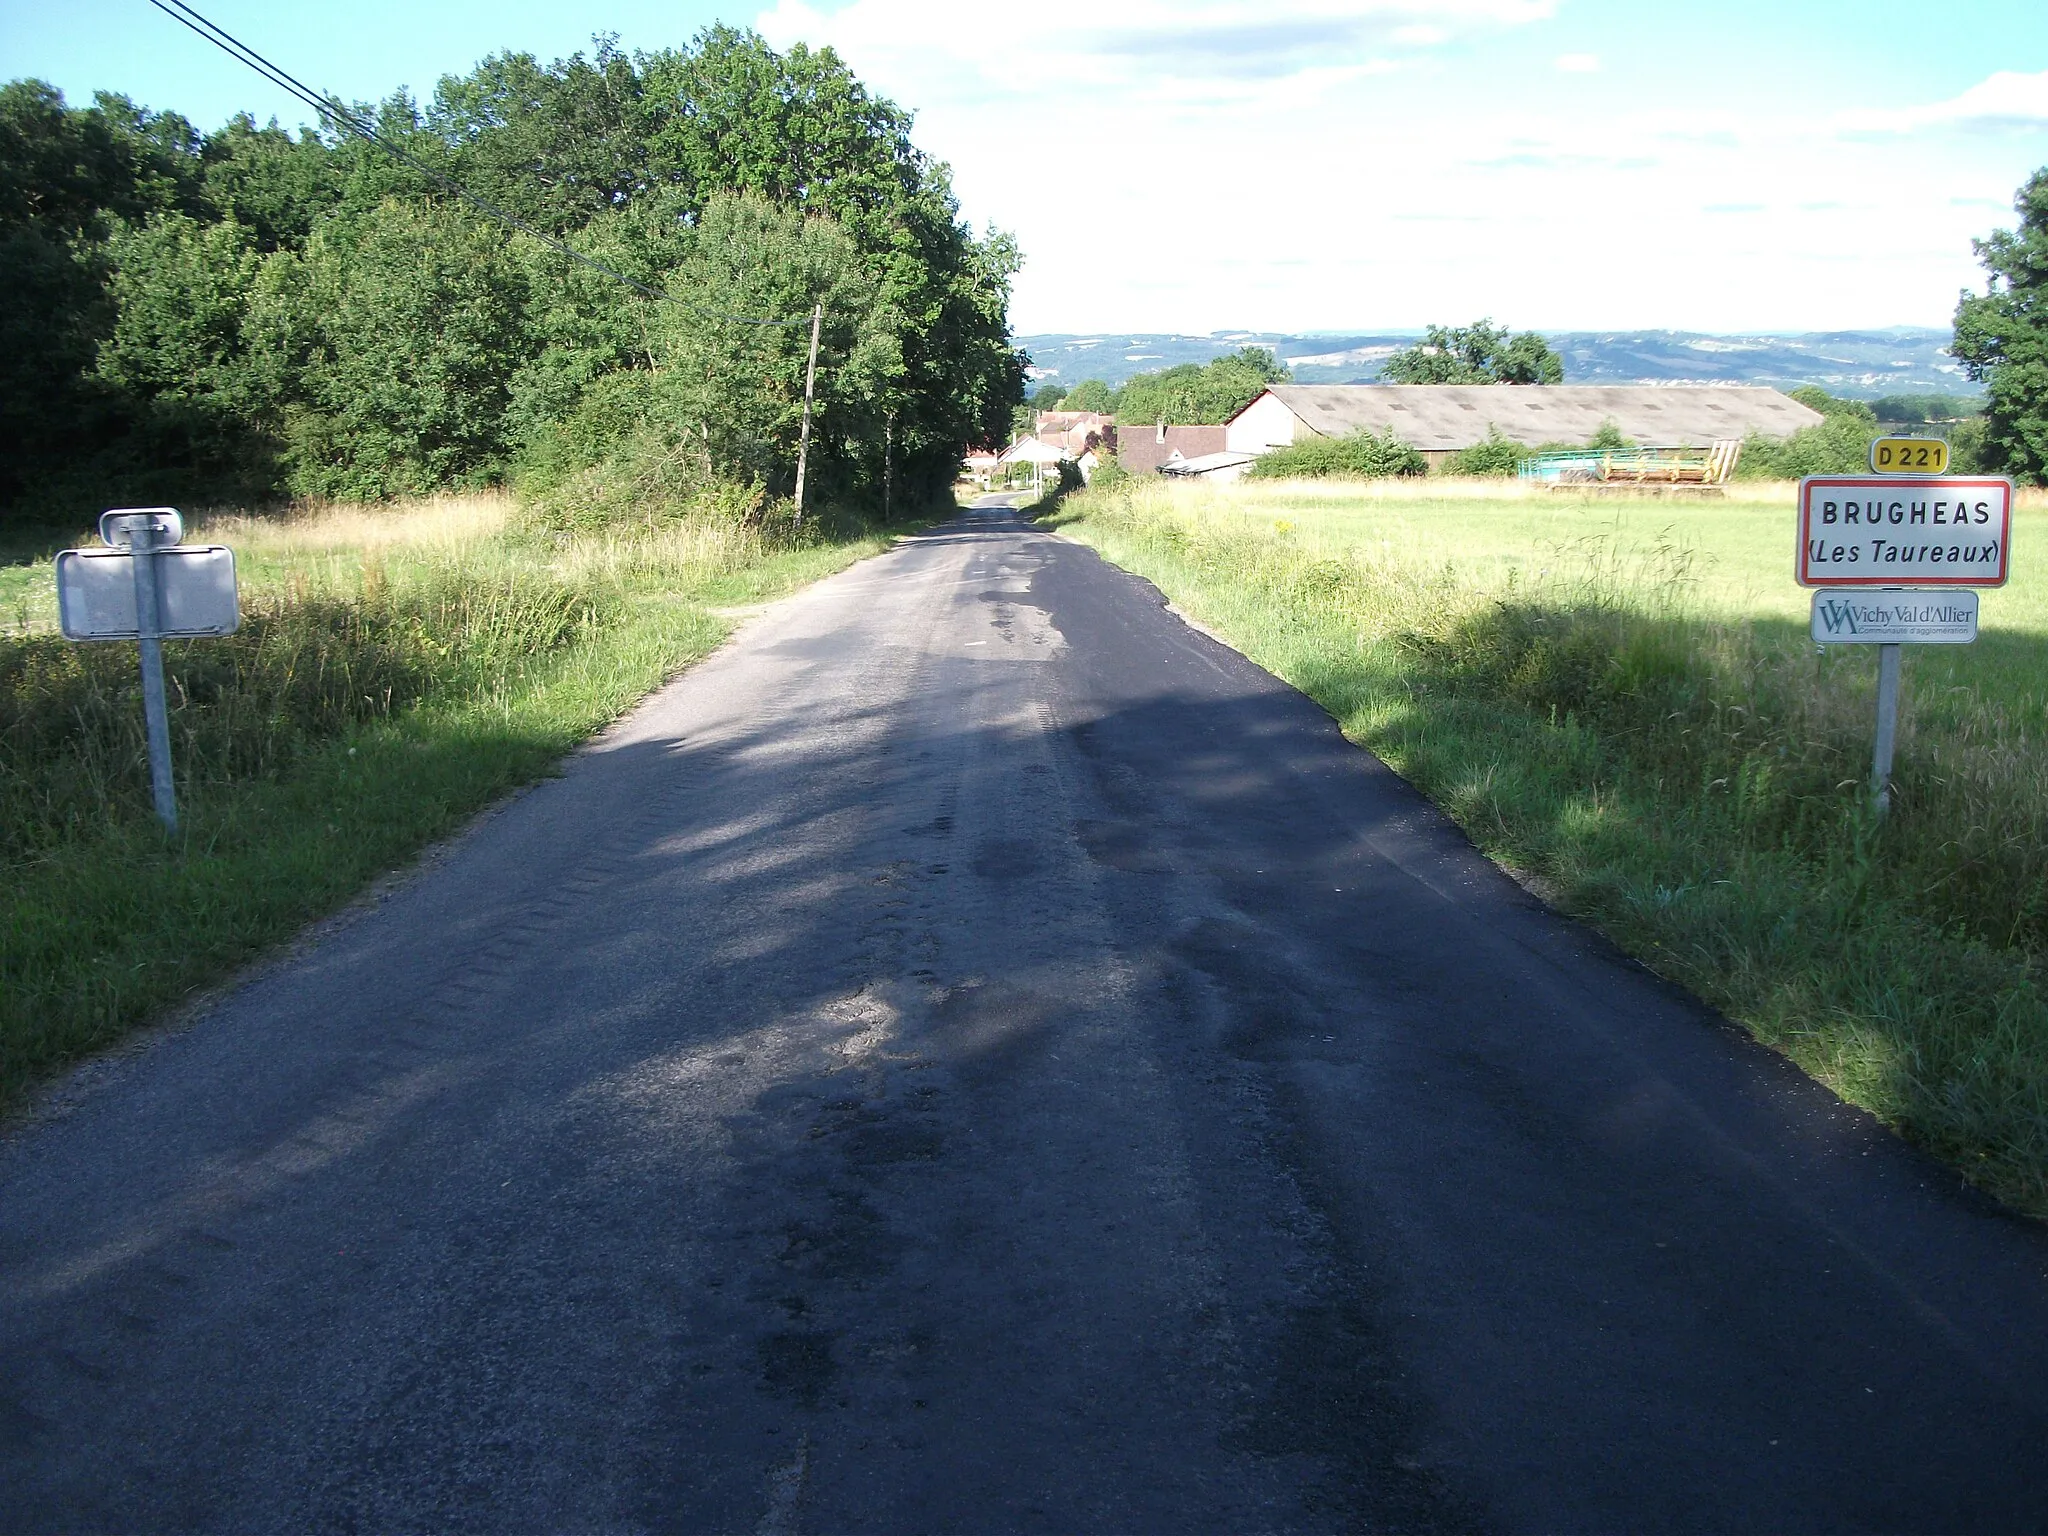 Photo showing: [8379] Entrance of hamlet Les Taureaux in Brugheas (departmental road 221) towards Hauterive.